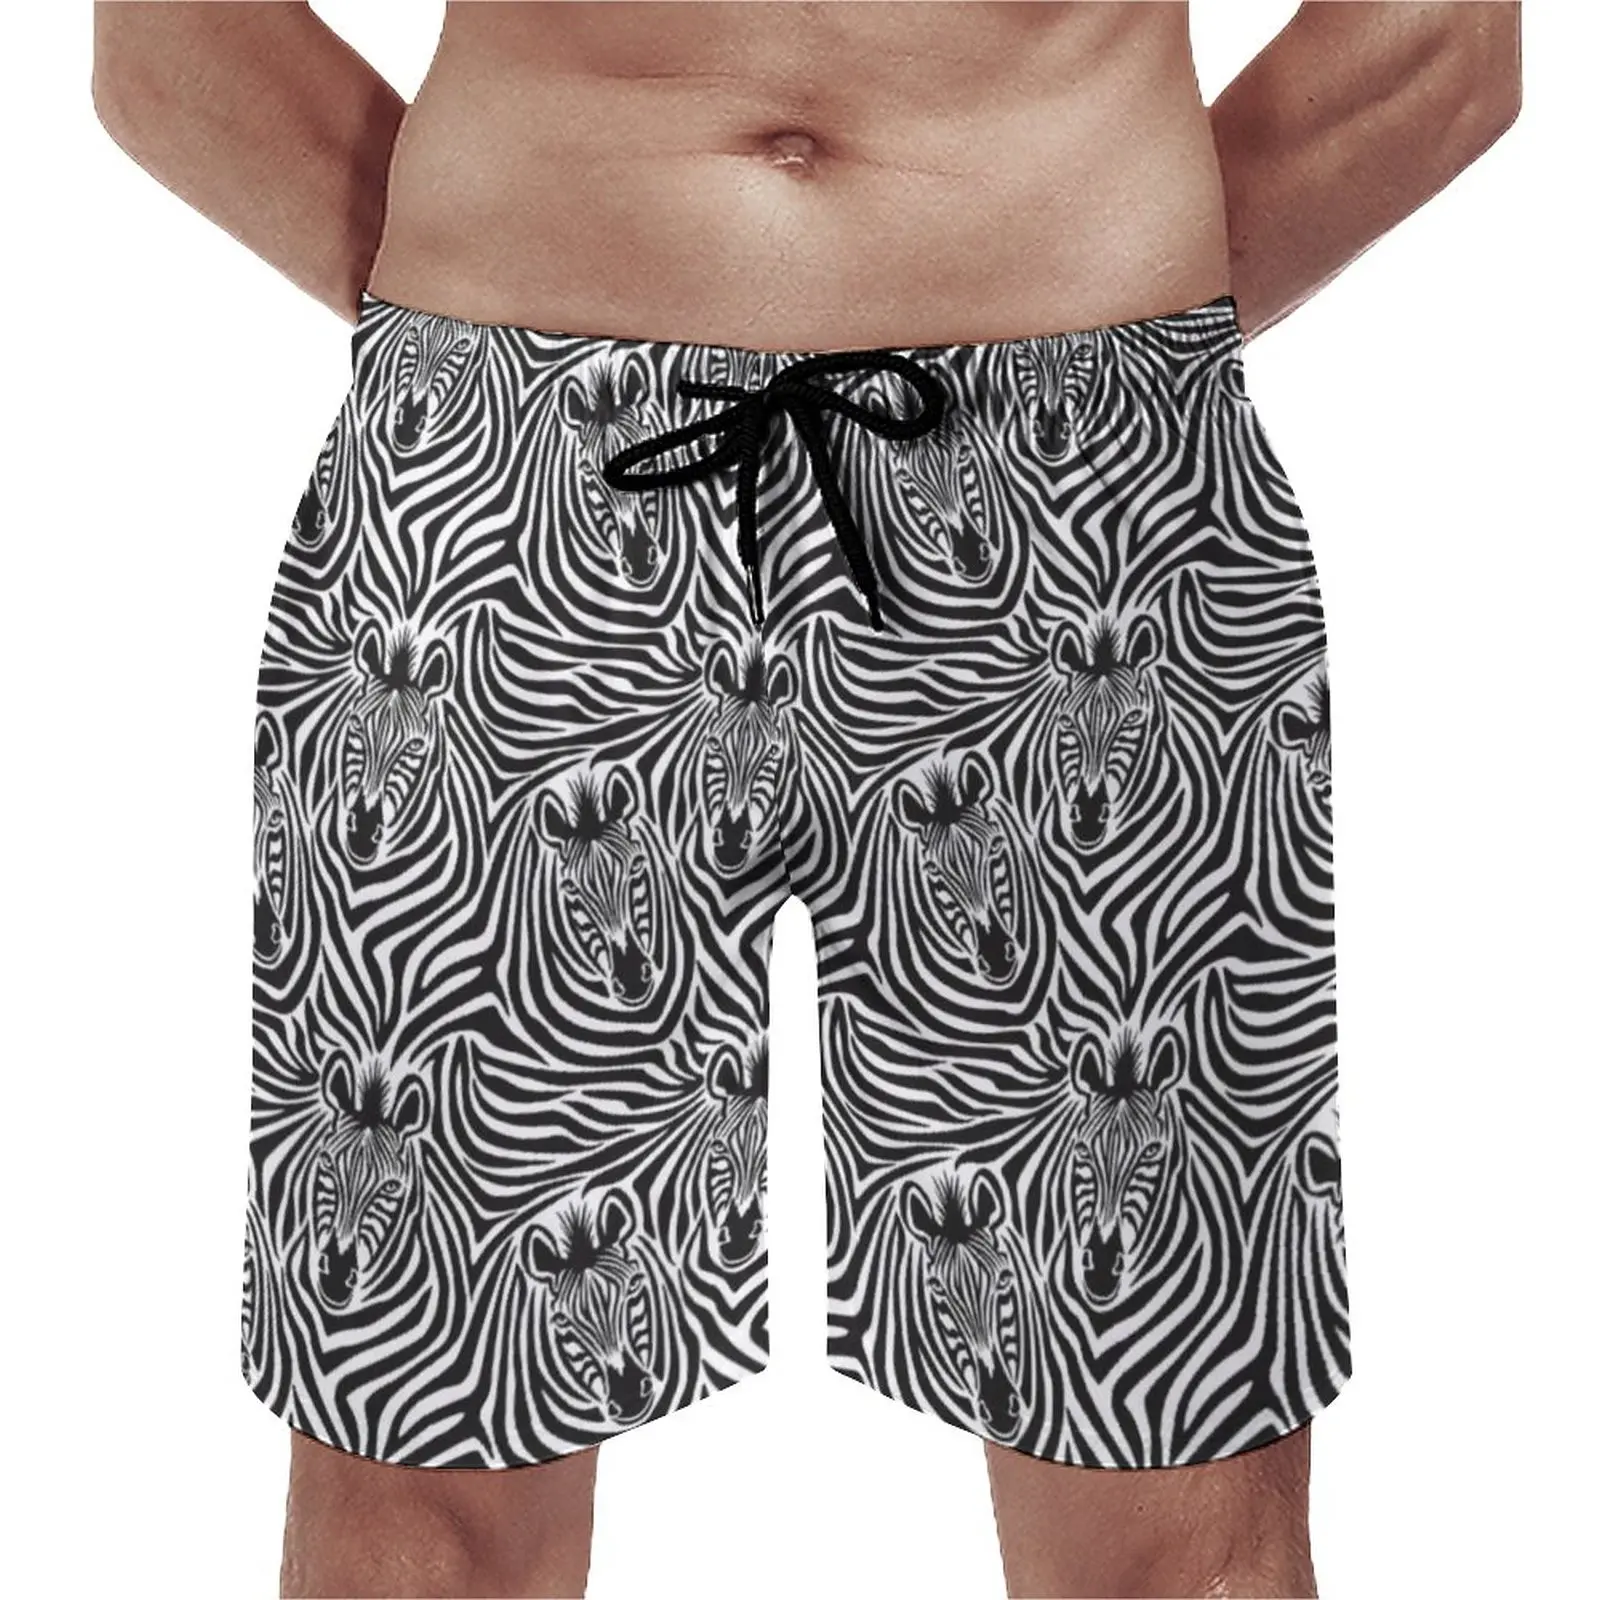 

Wild Zebra Gym Shorts Summer Abstract Animal Print Running Surf Beach Shorts Males Fast Dry Casual Custom Plus Size Beach Trunks